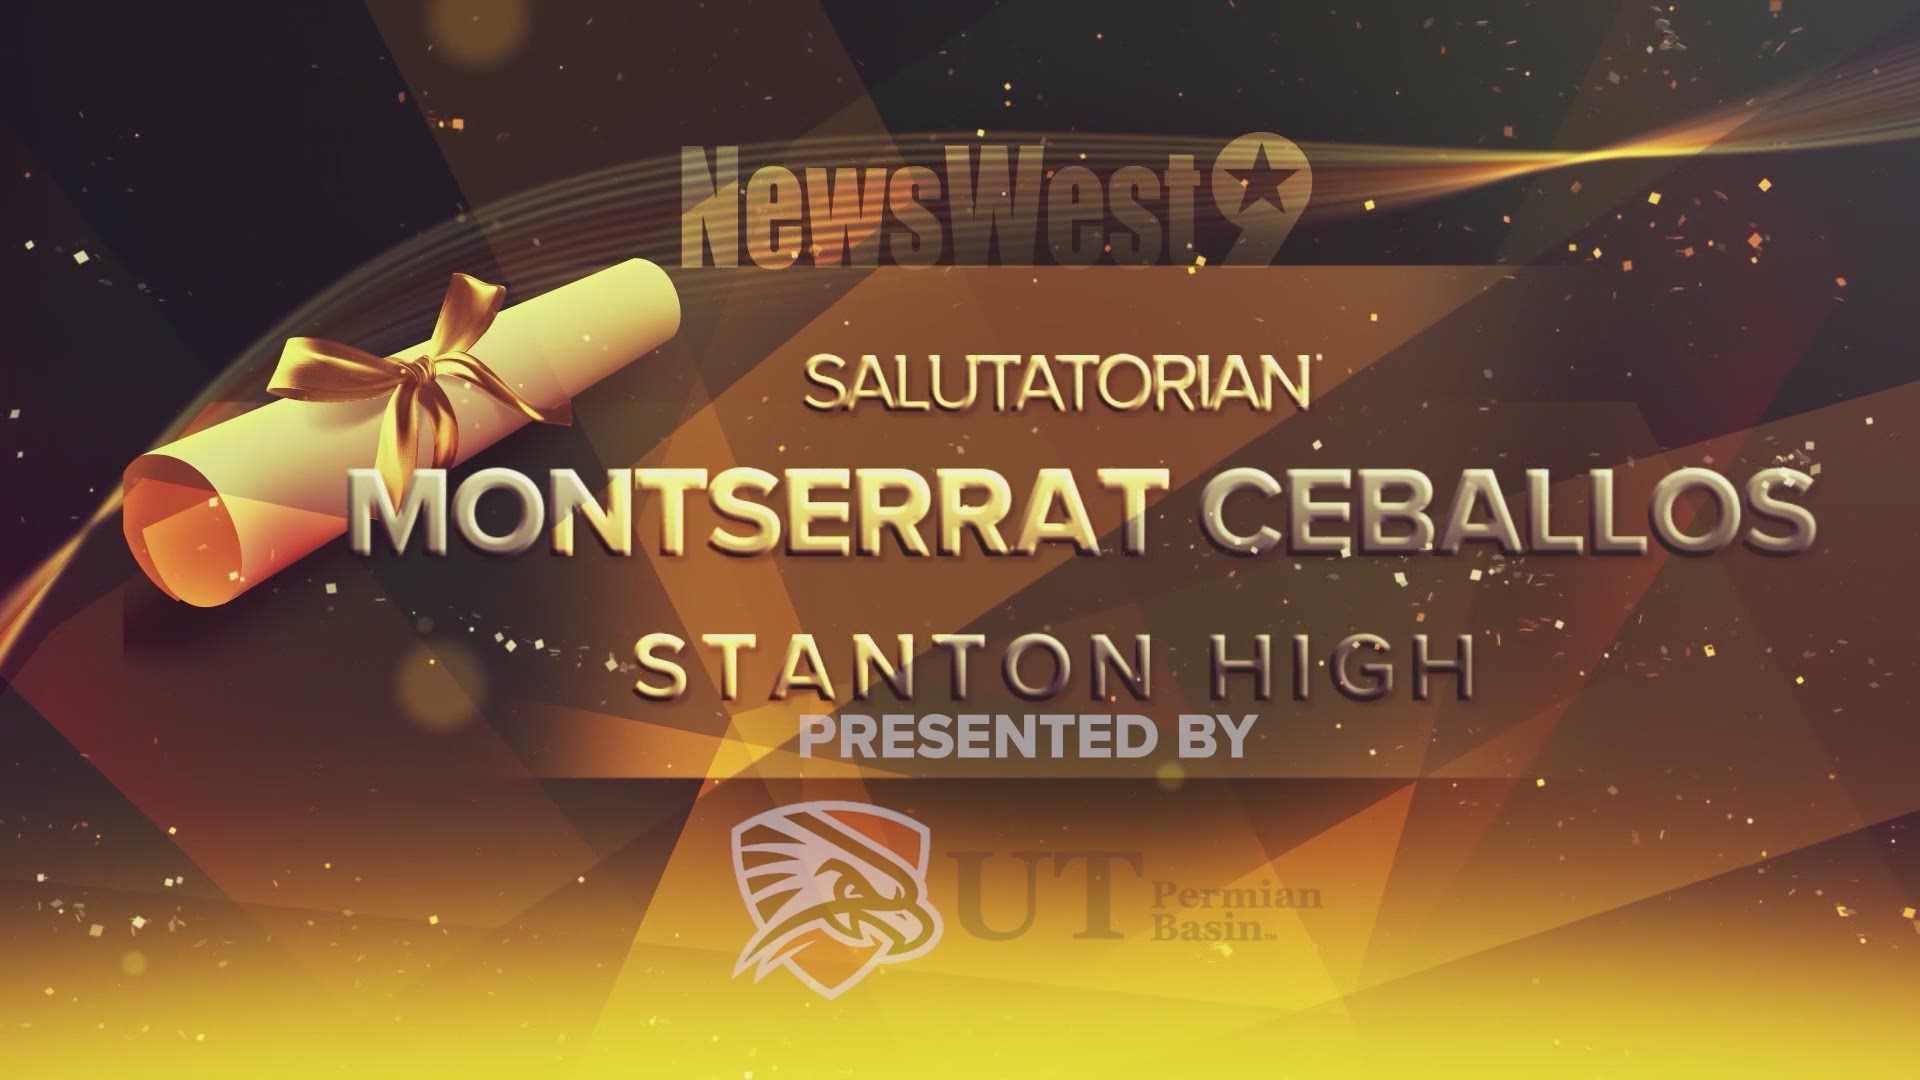 Montserrat Ceballos delivers the Salutatorian speech for Stanton High